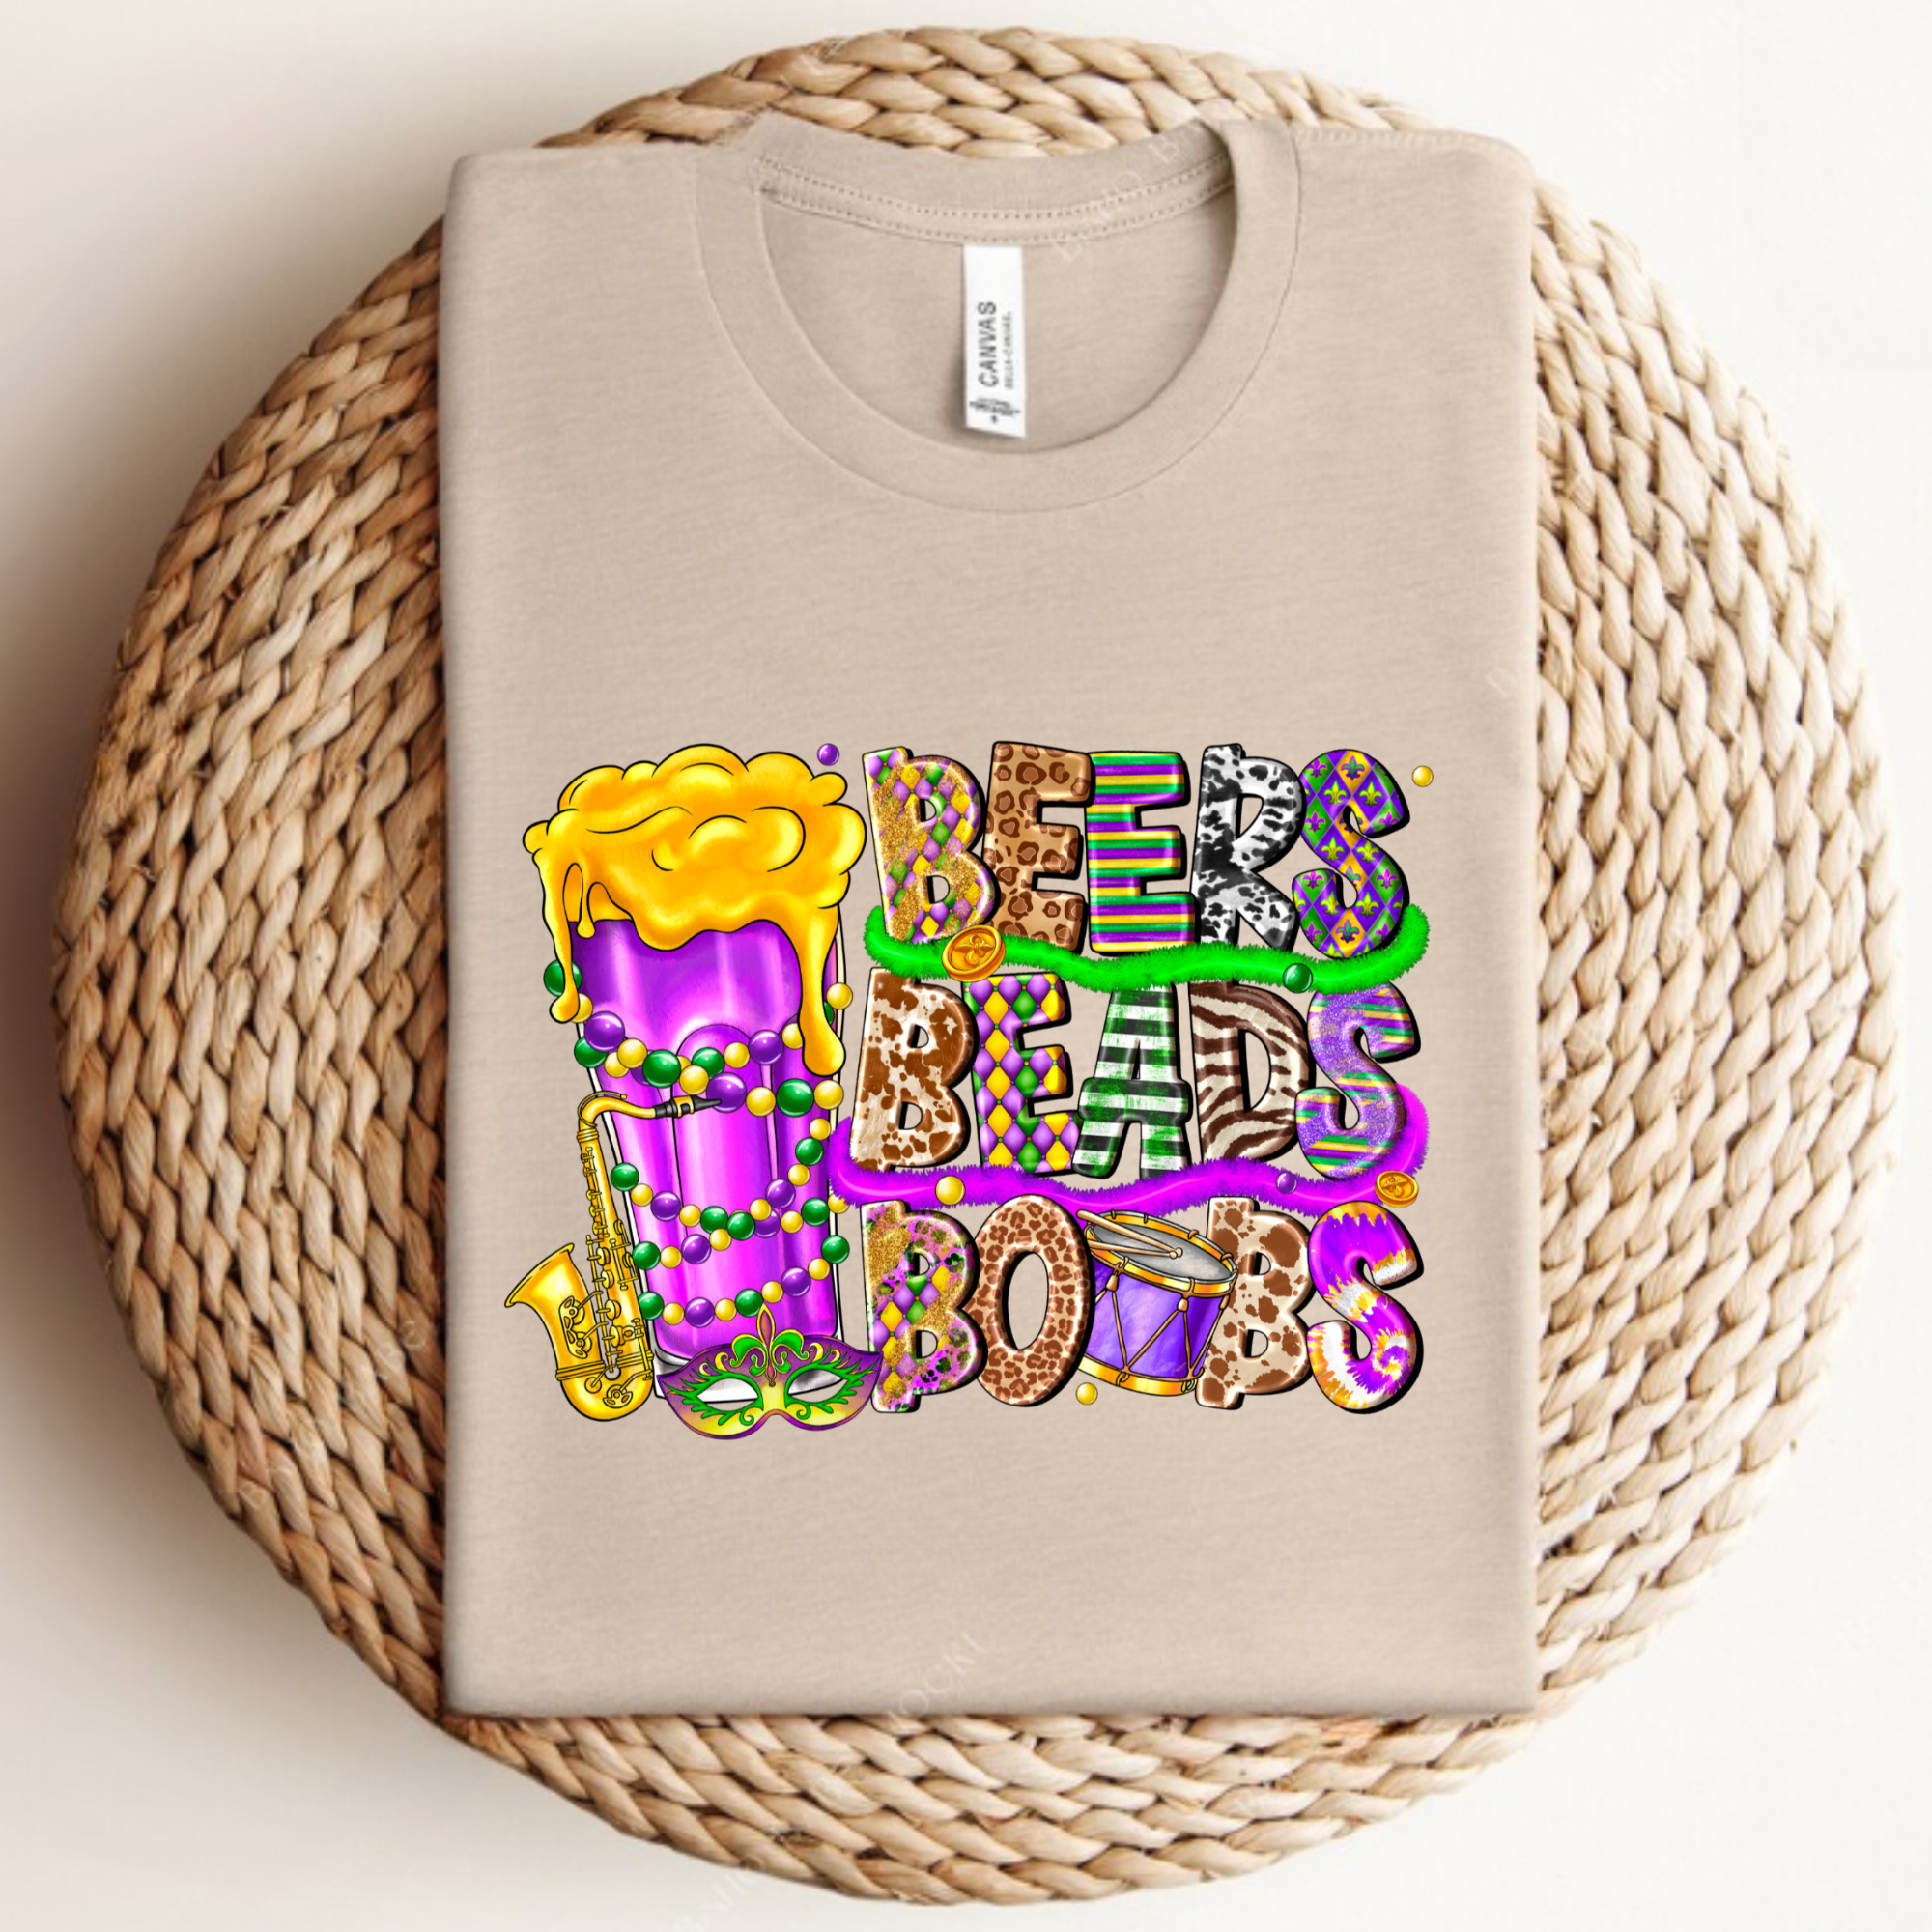 Beers Beads Boobs Shirt - Mardi Gras Festival Gift